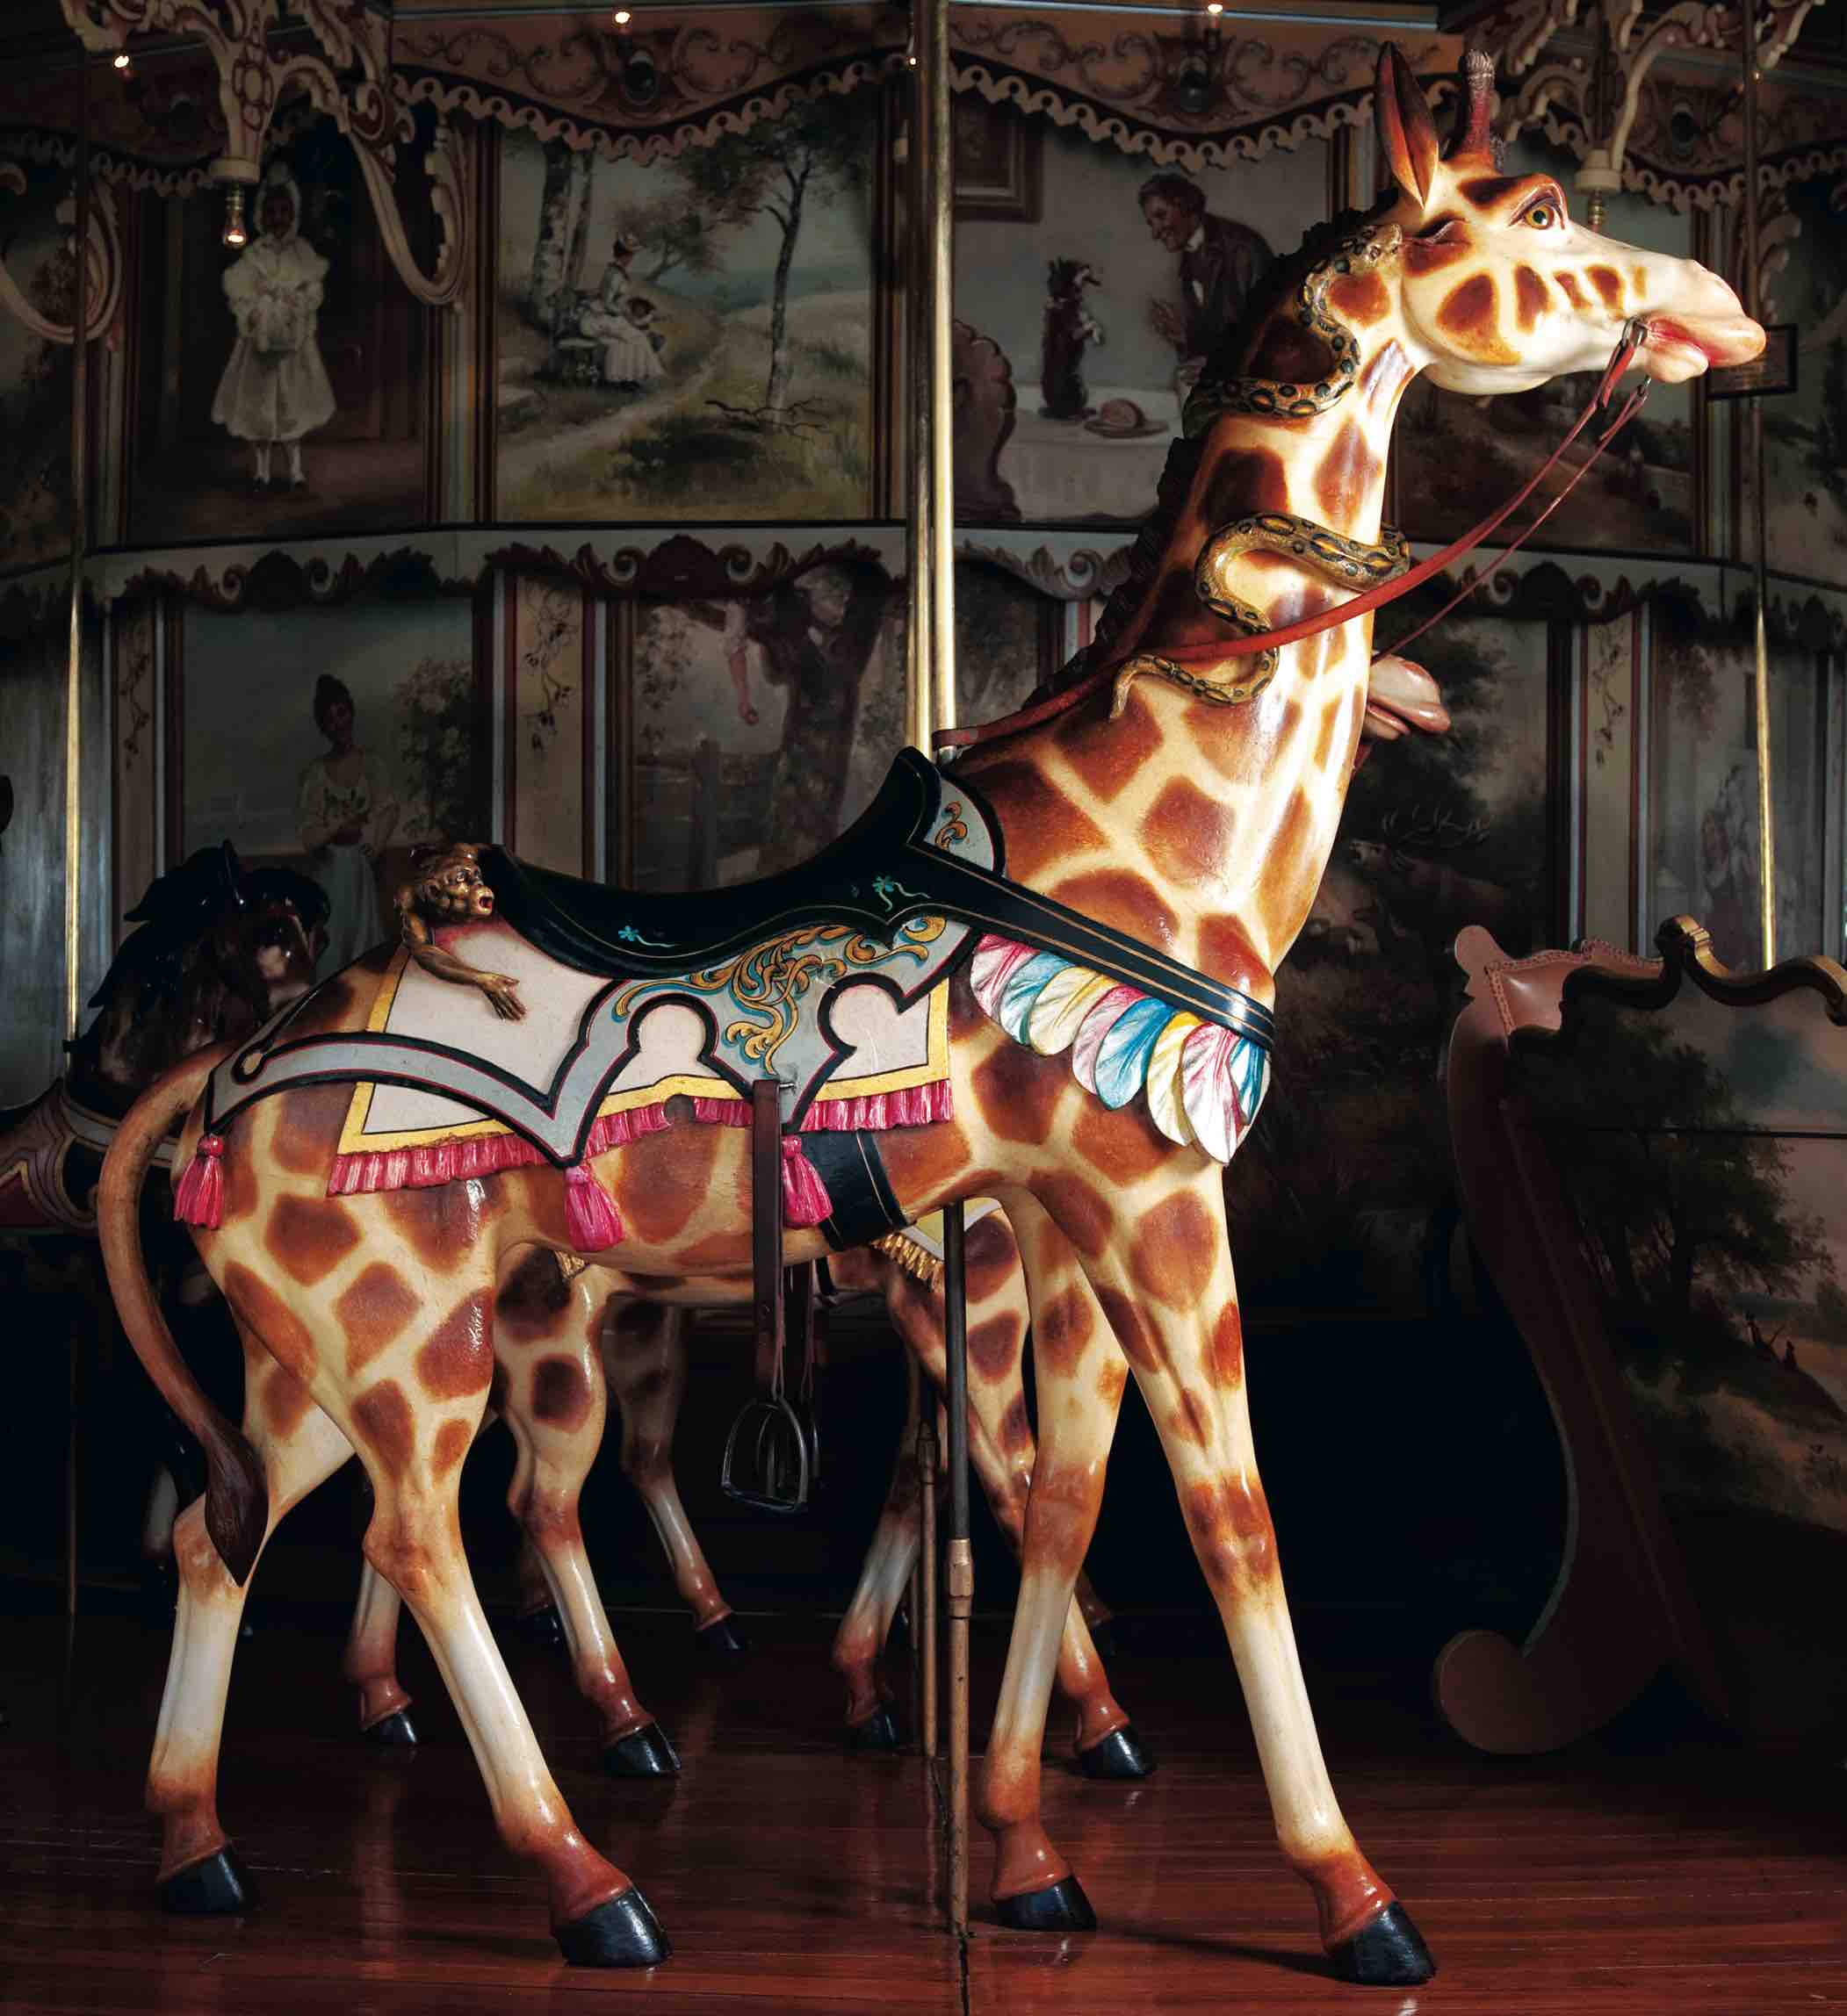 Carousel Giraffe Kit Carson - Bed & breakfasts & inns of Colorado Association